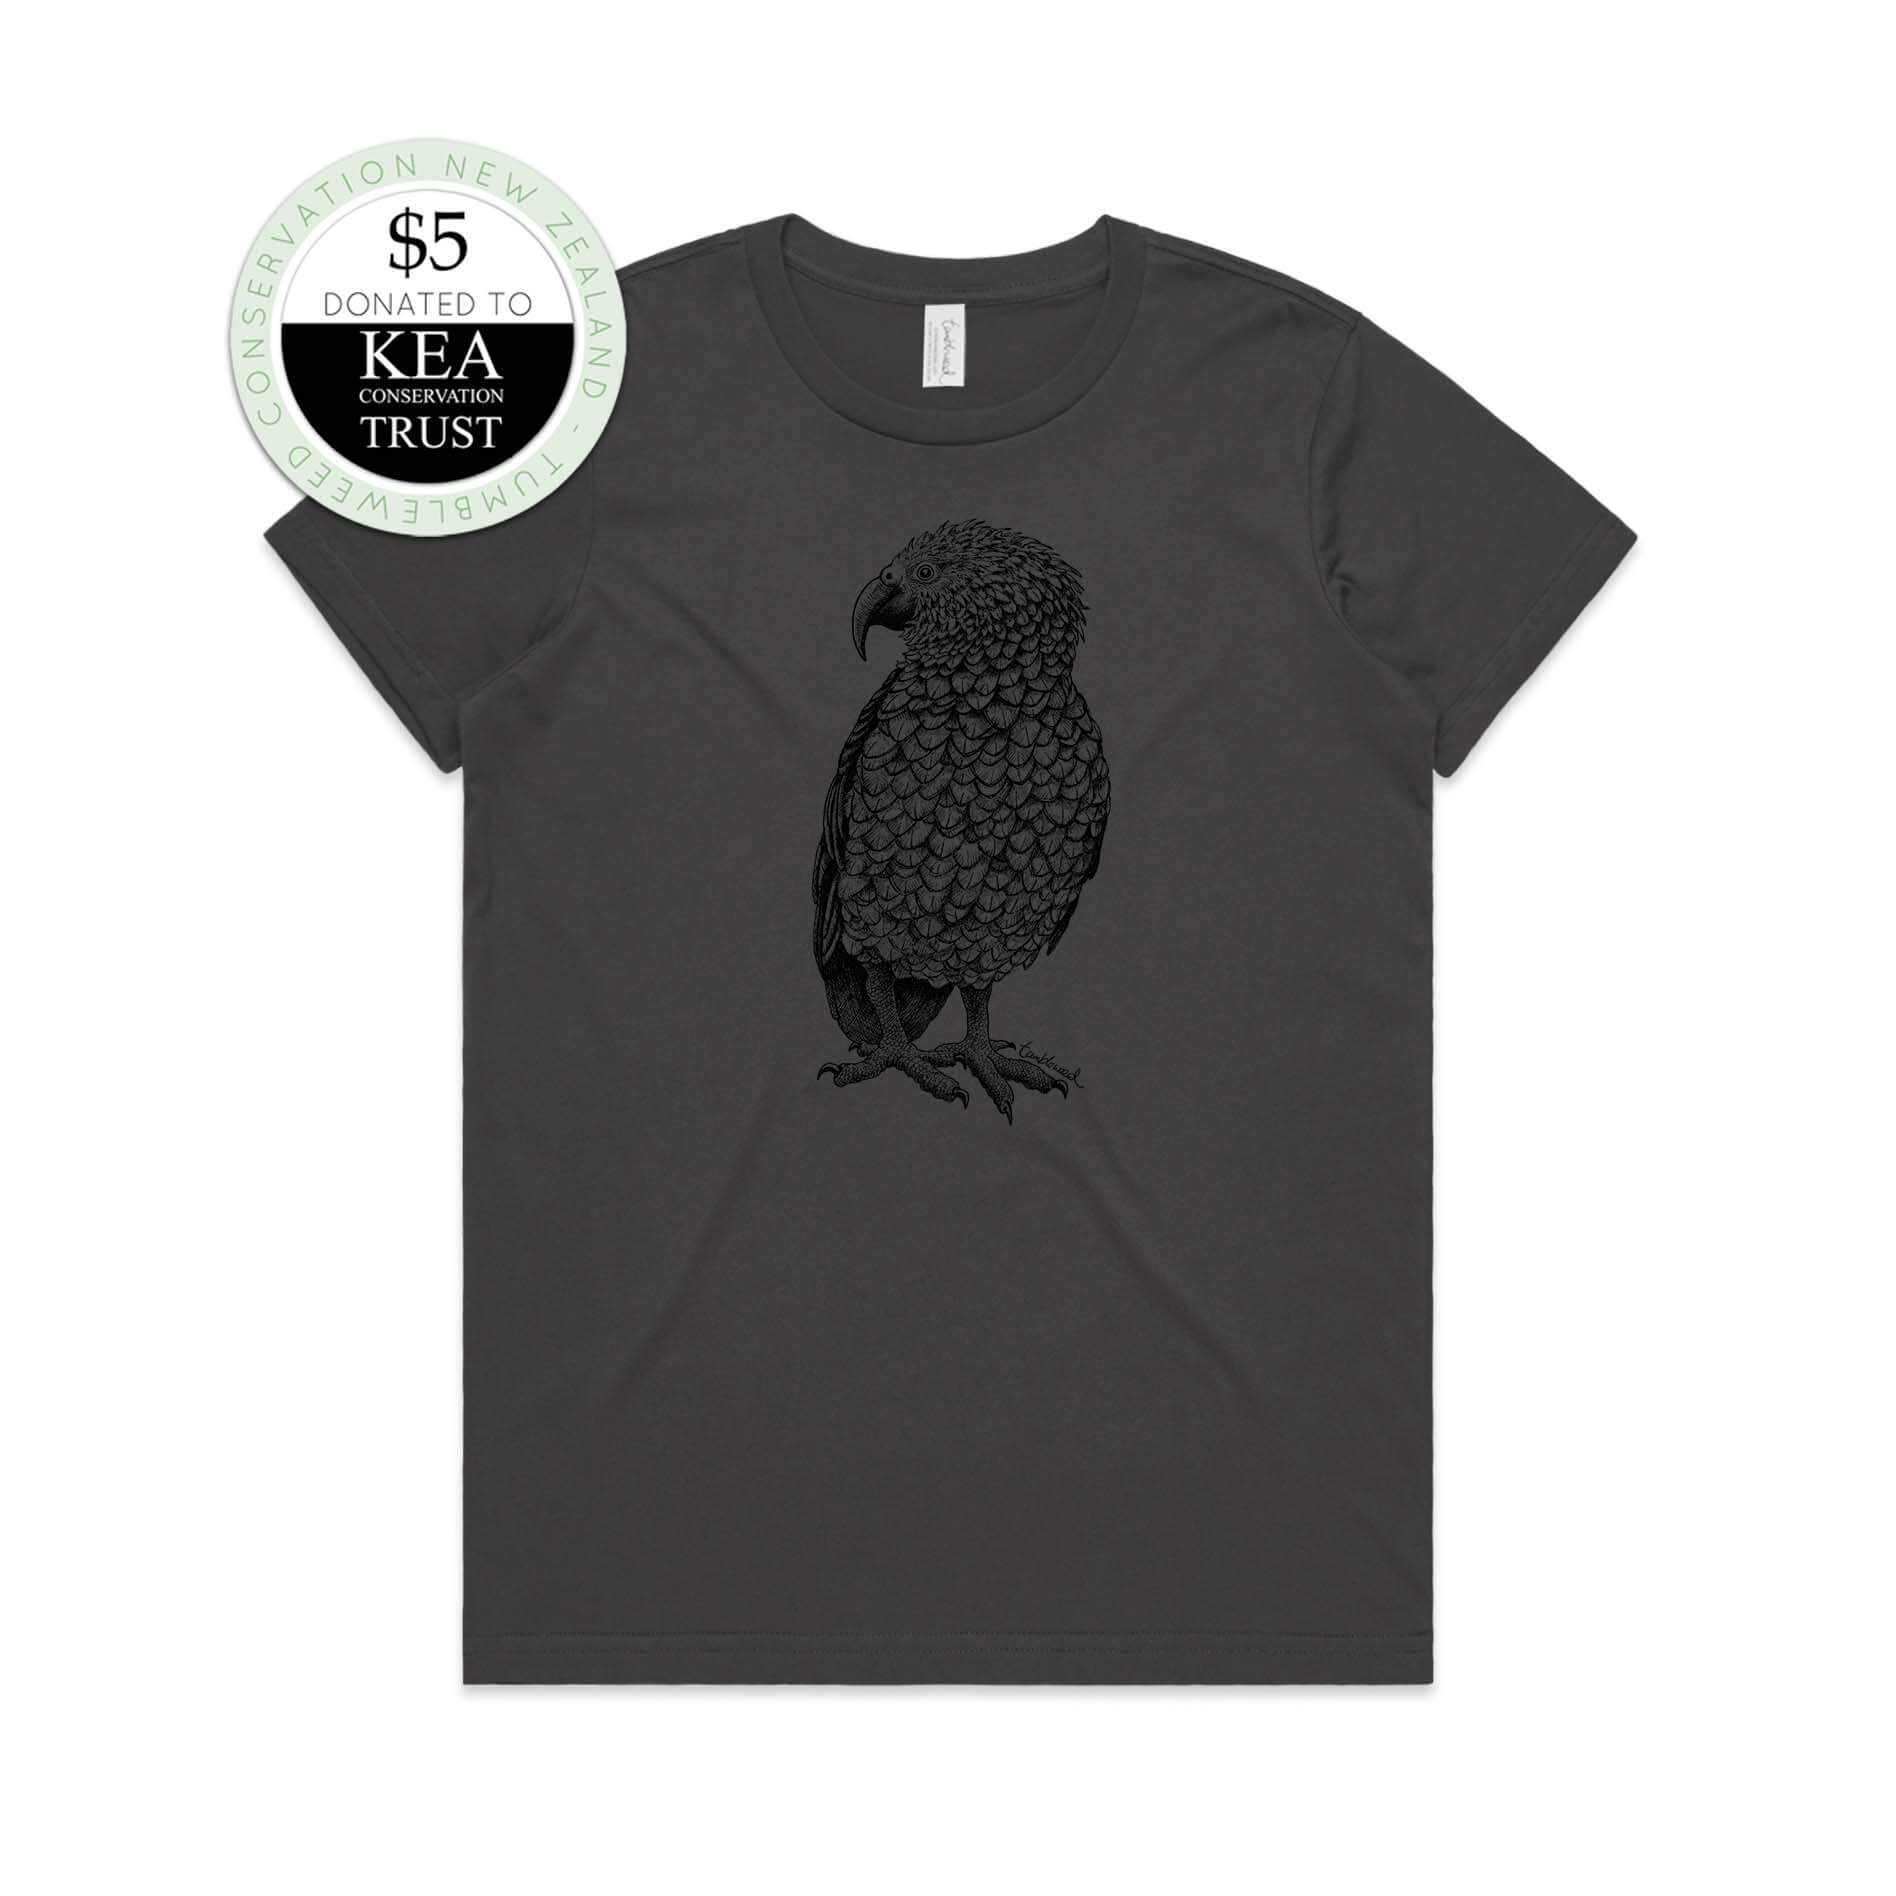 Charcoal, female t-shirt featuring a screen printed kea design.